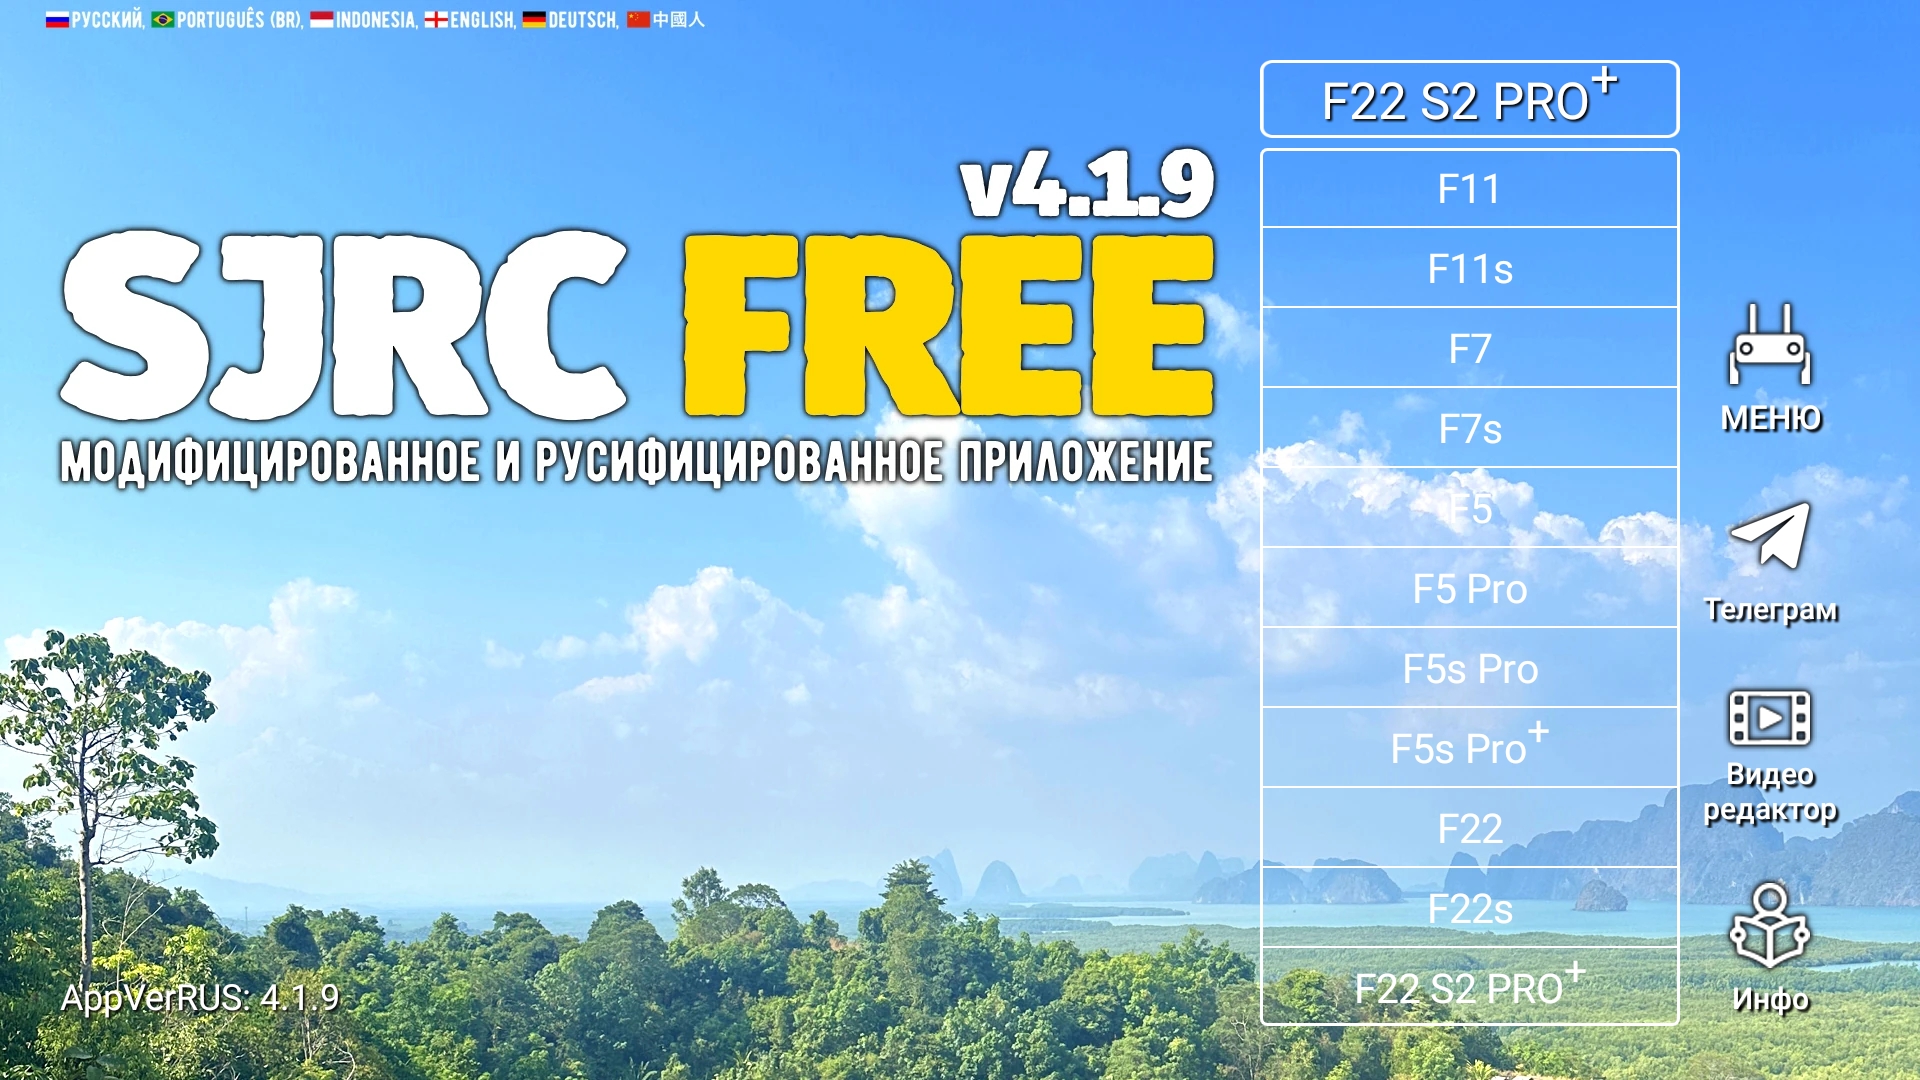 Новая версия приложения для квадрокоптеров SJRC FREE v4.1.9 (SJ F PRO)